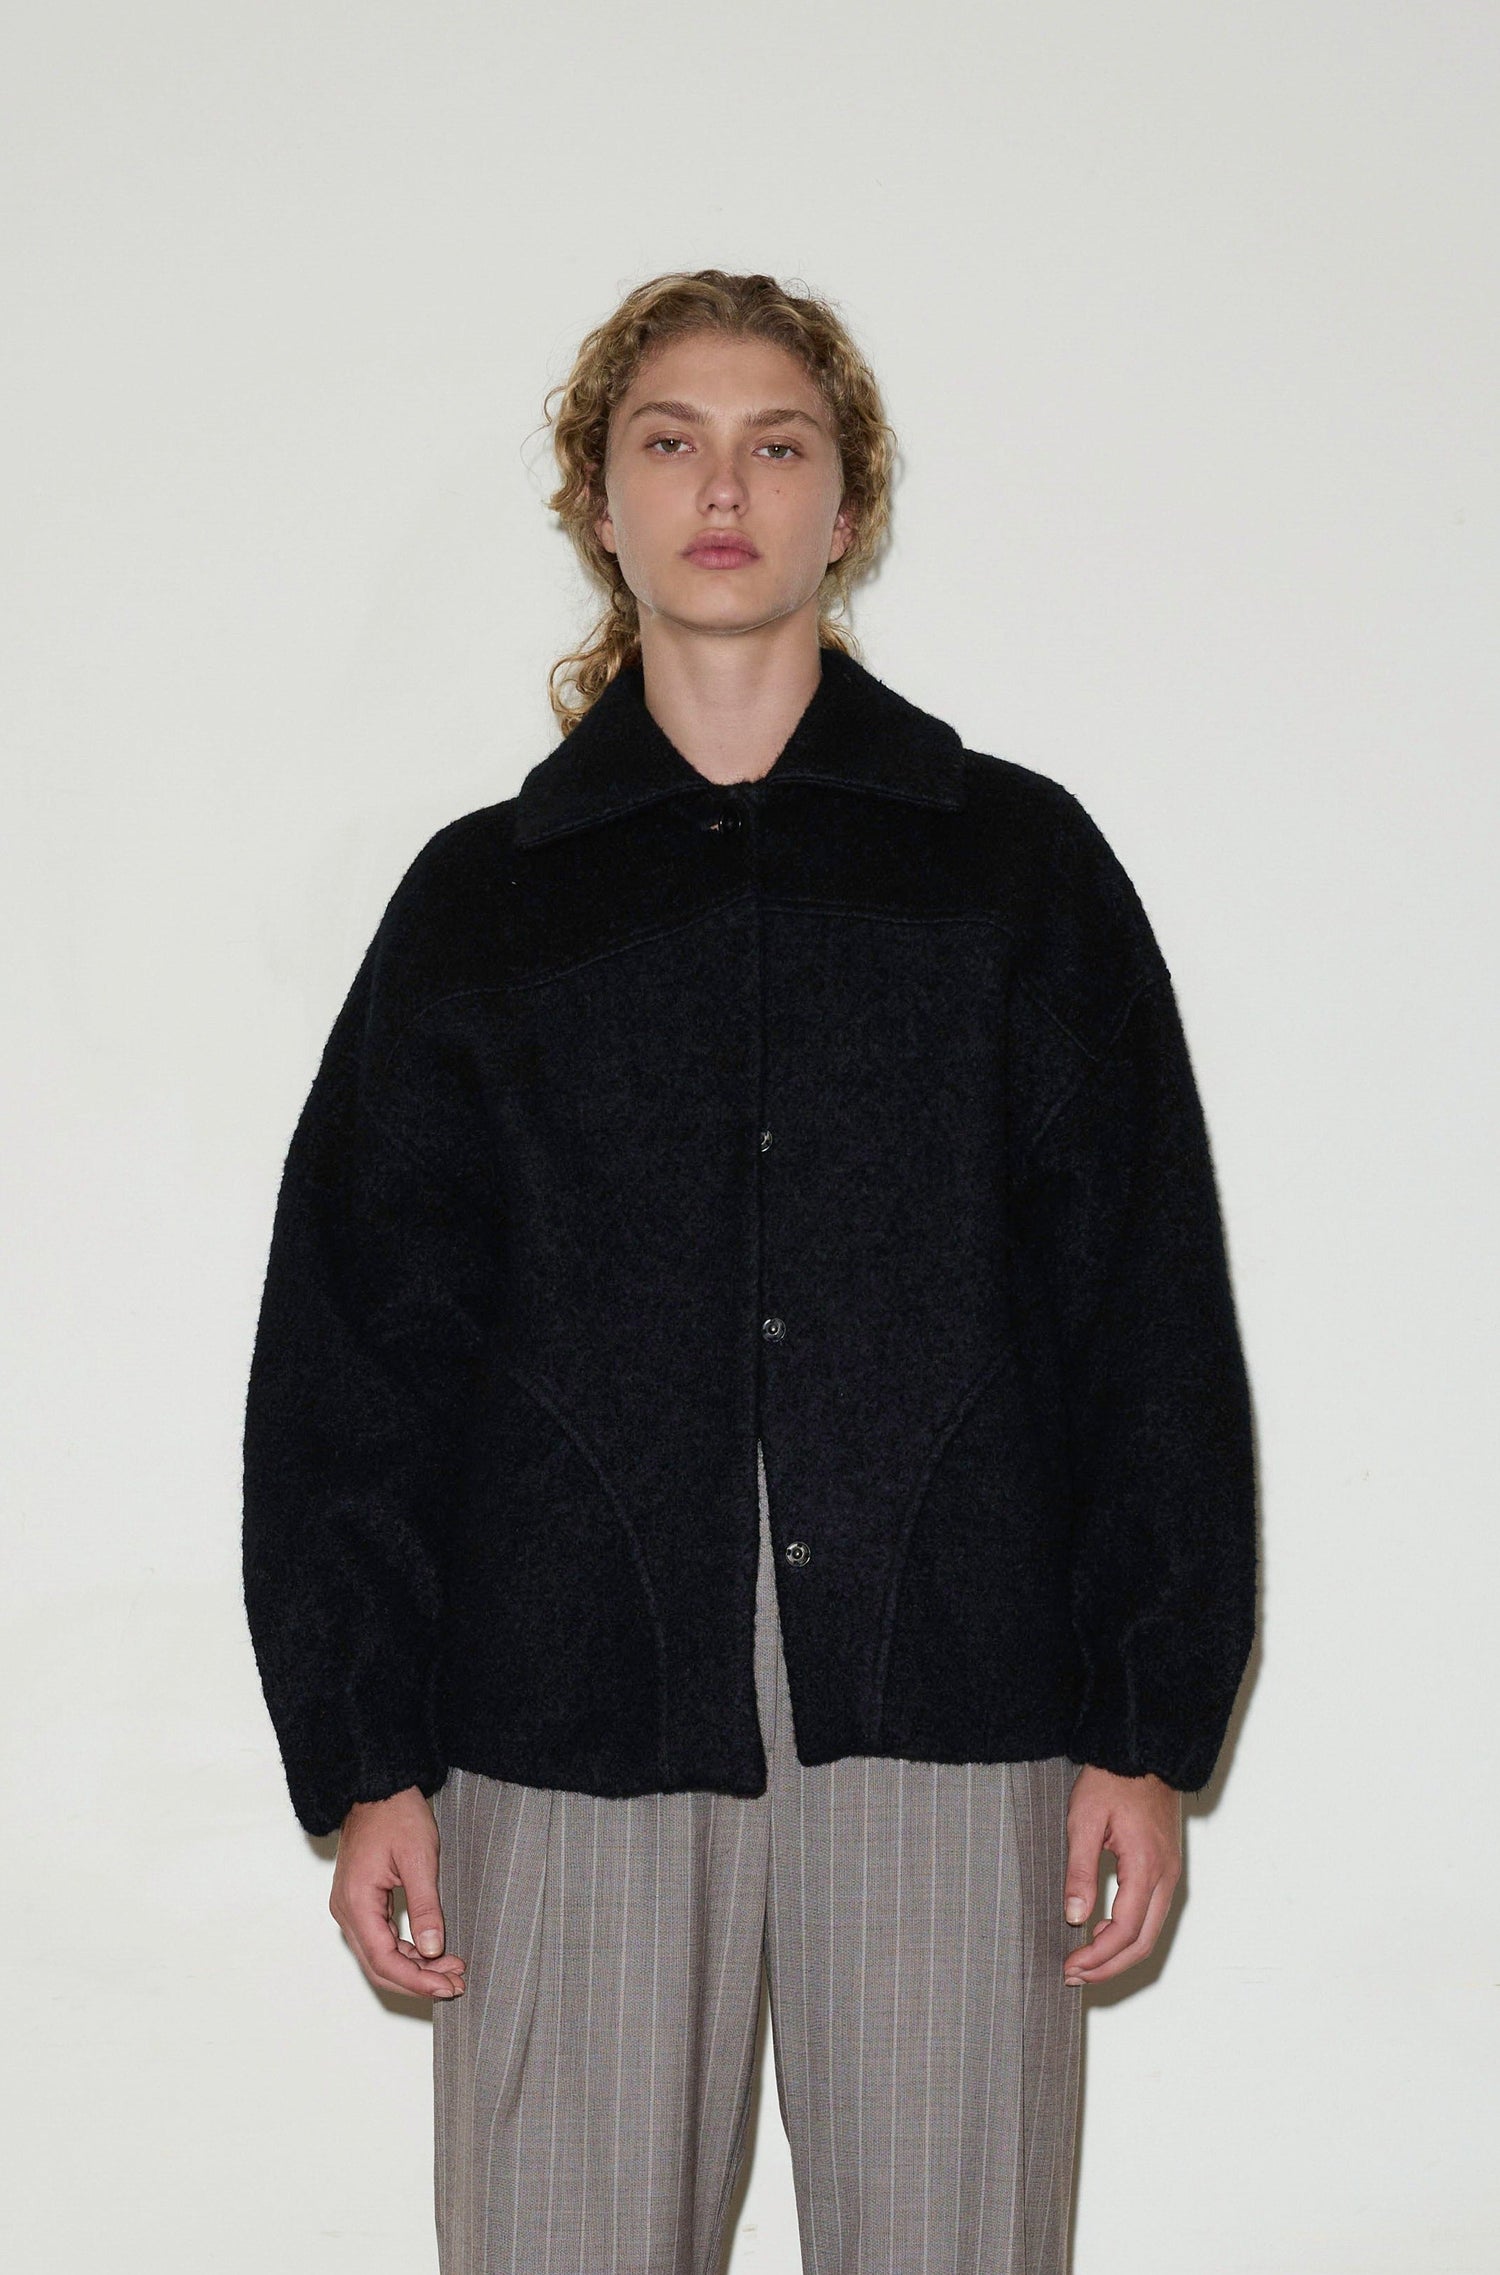 Female model wearing Boiled Wool Coat - Black by Deiji Studios against plain background